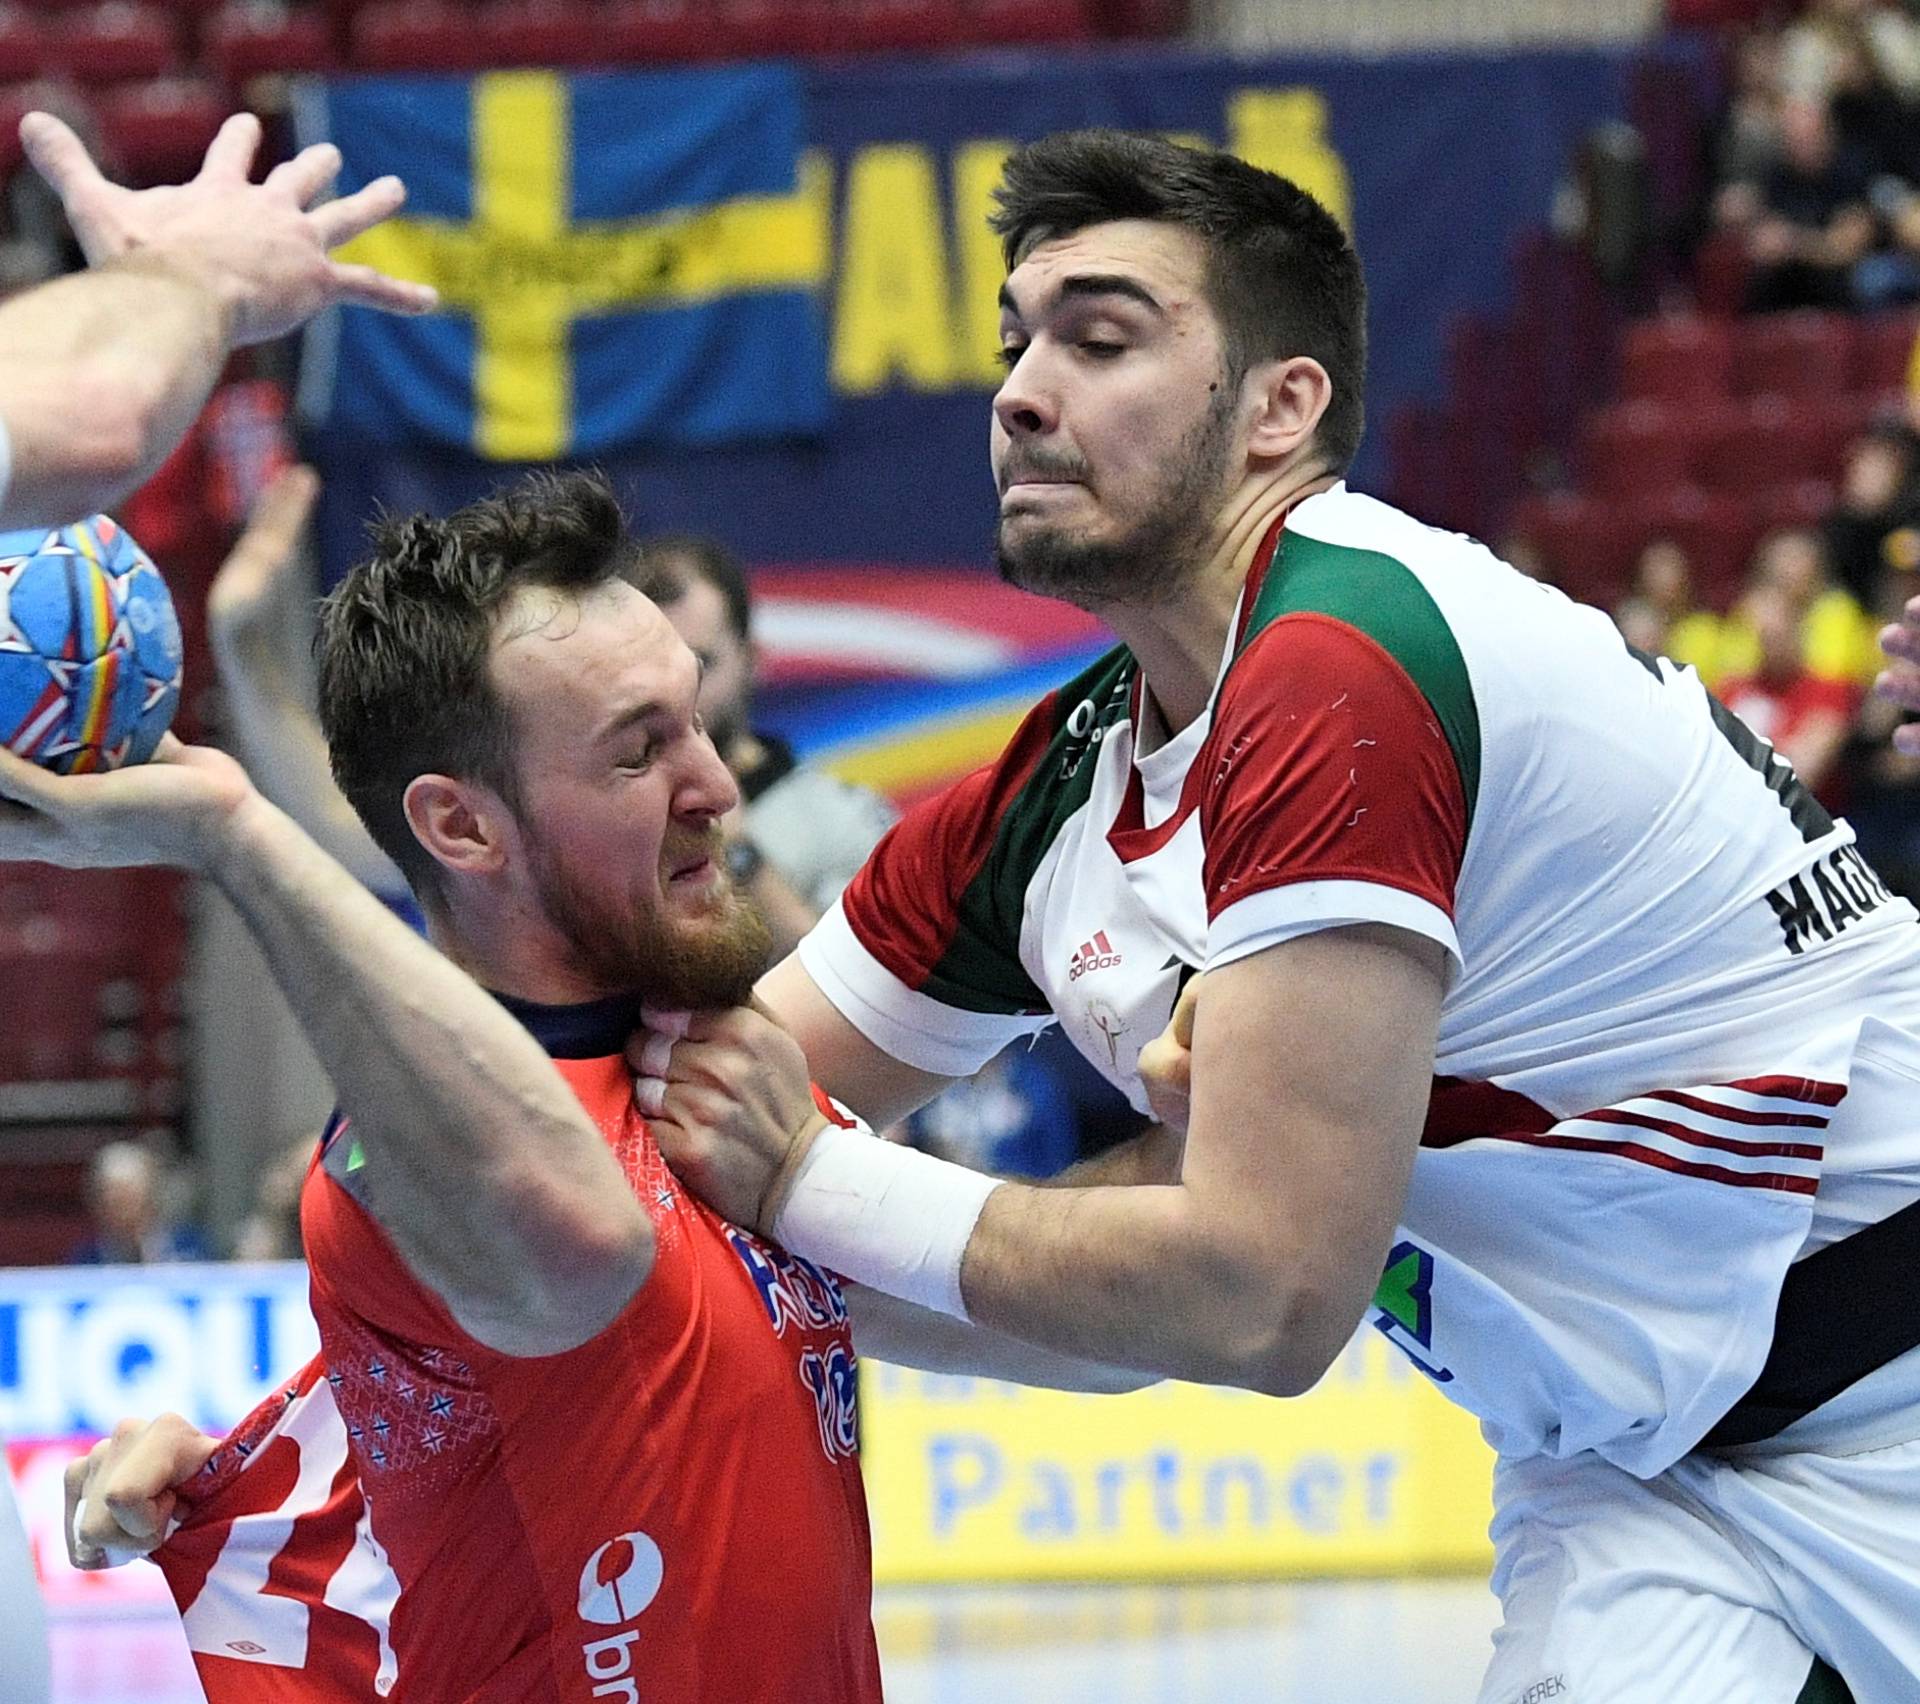 Handball - 2020 European Handball Championship - Main Round Group 2 - Norway v Hungary